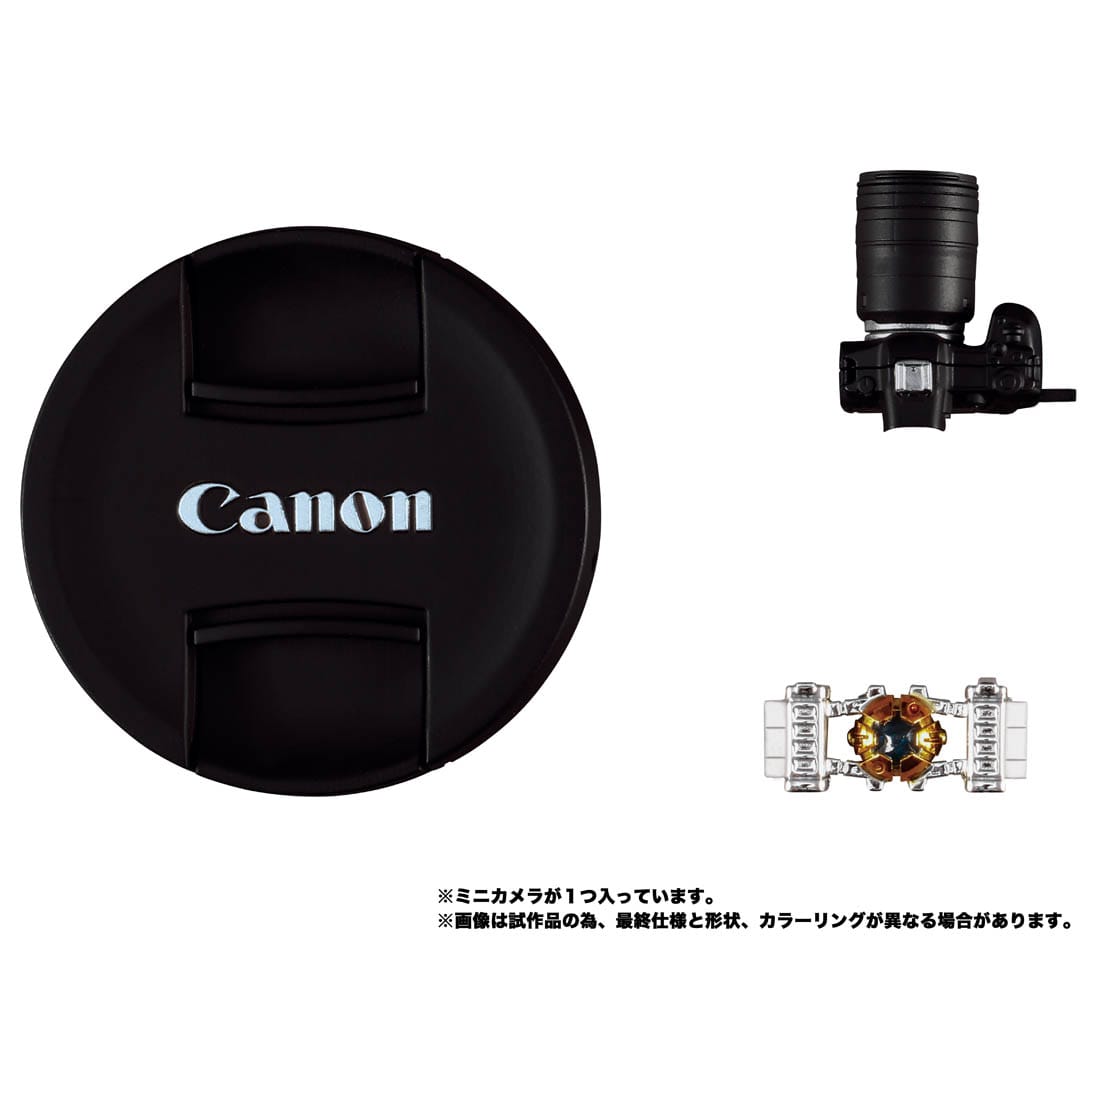 Canon/TRANSFORMERS OPTIMUS PRIME R5